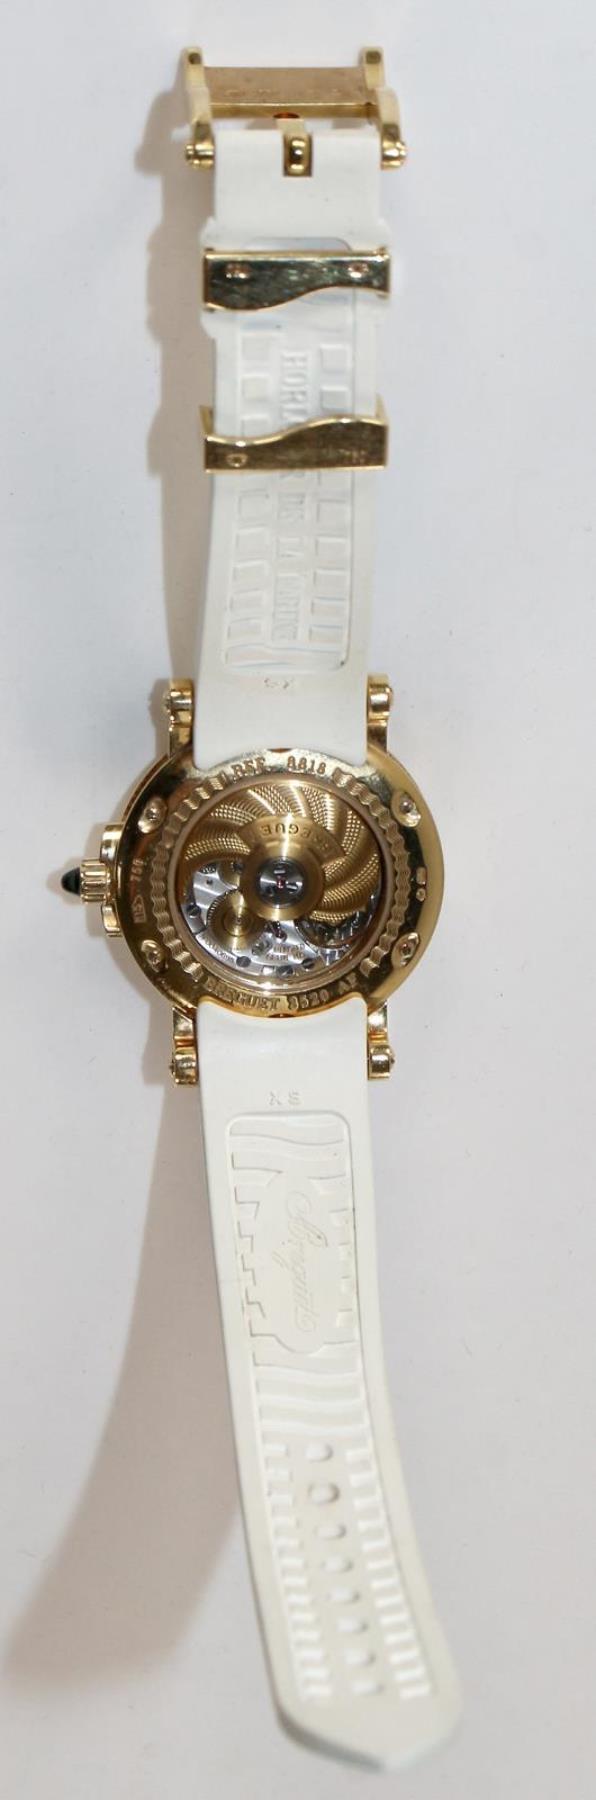 Breguet ladies' wristwatch. - Image 4 of 7